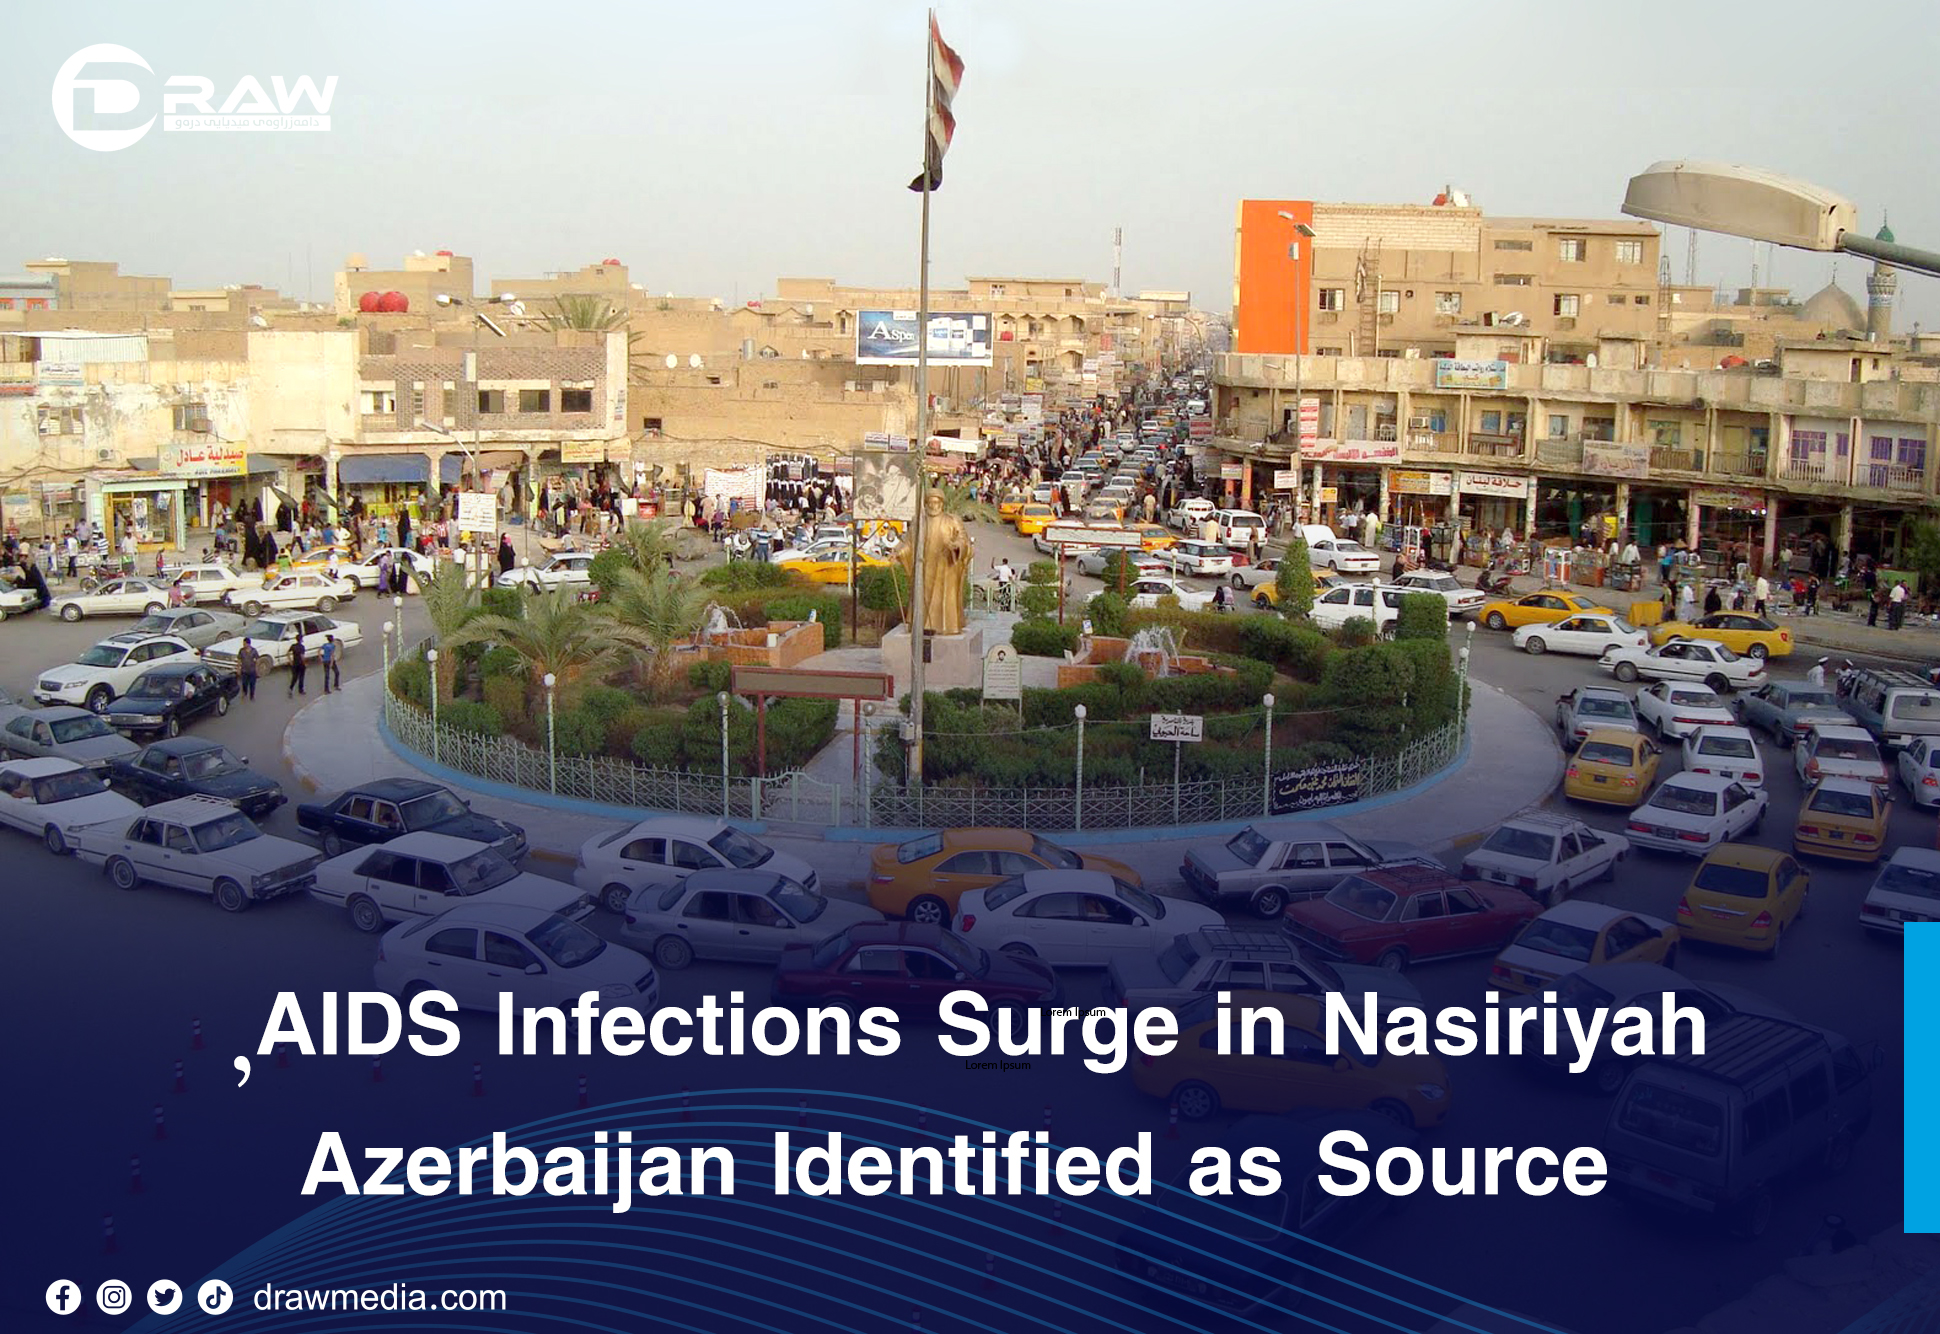 DrawMedia.net / AIDS Infections Surge in Nasiriyah, Azerbaijan Identified as Source